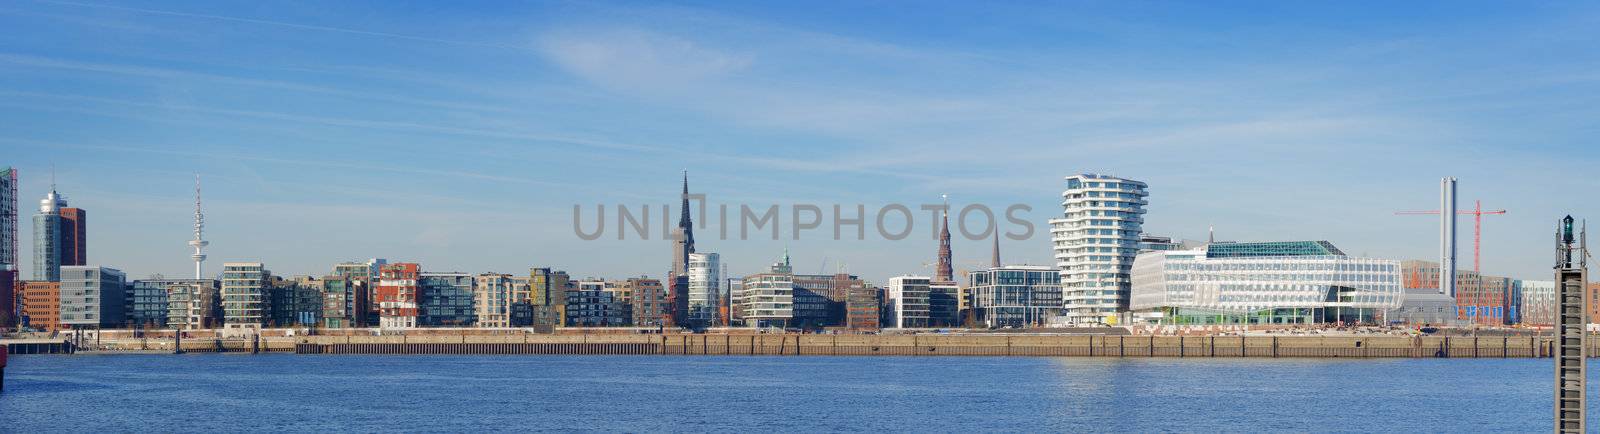 Panorama picture Of Hamburg, Germany.